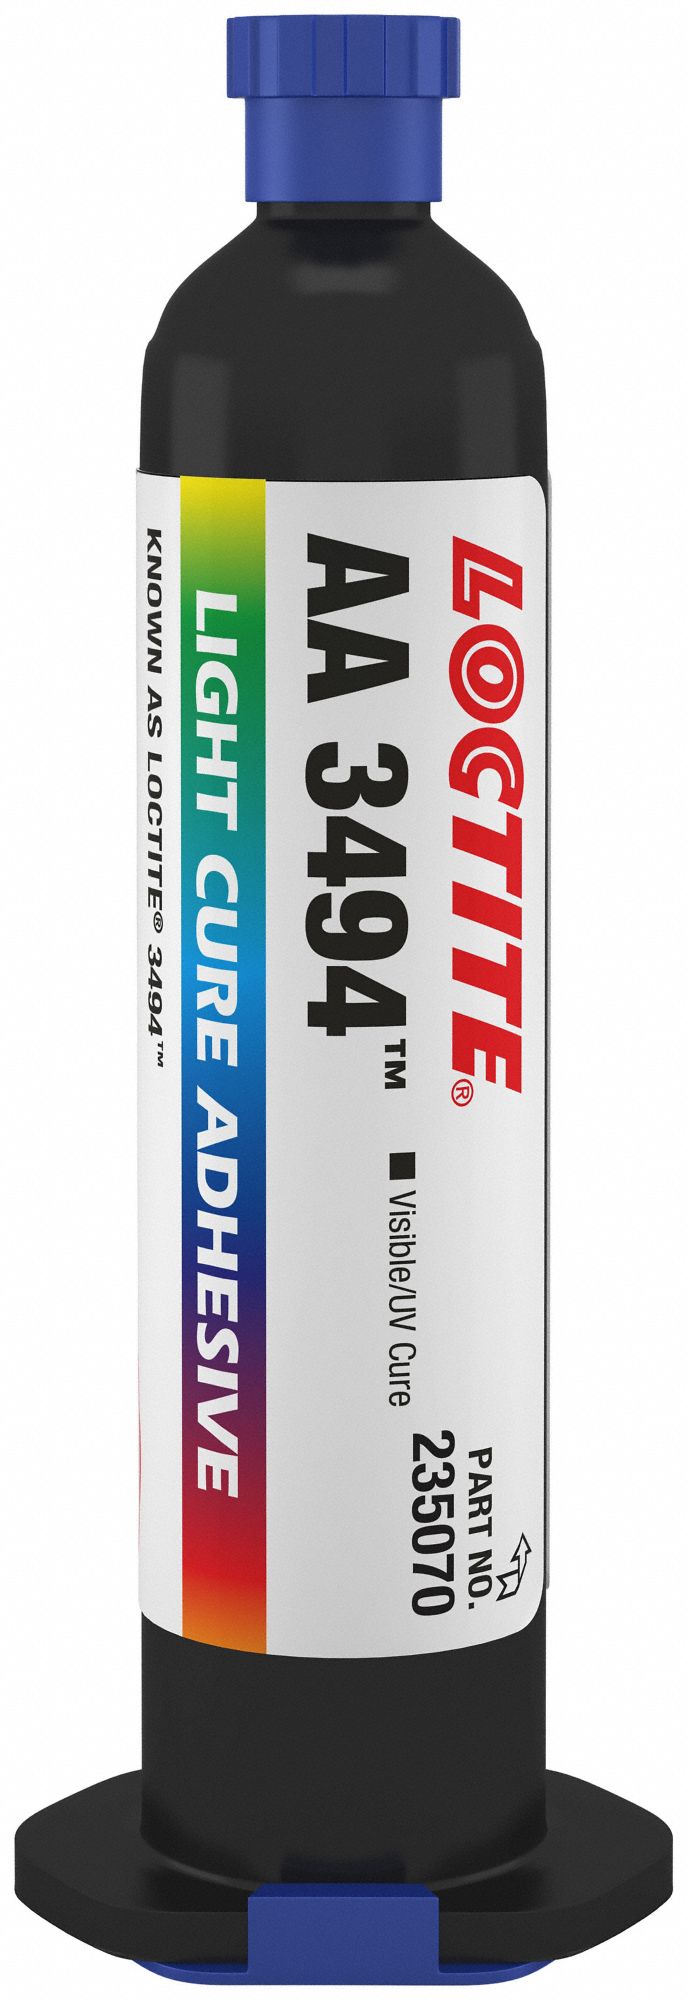 Loctite 3321 Light Cure UV Adhesive - Medical Device - 25ml Syringe